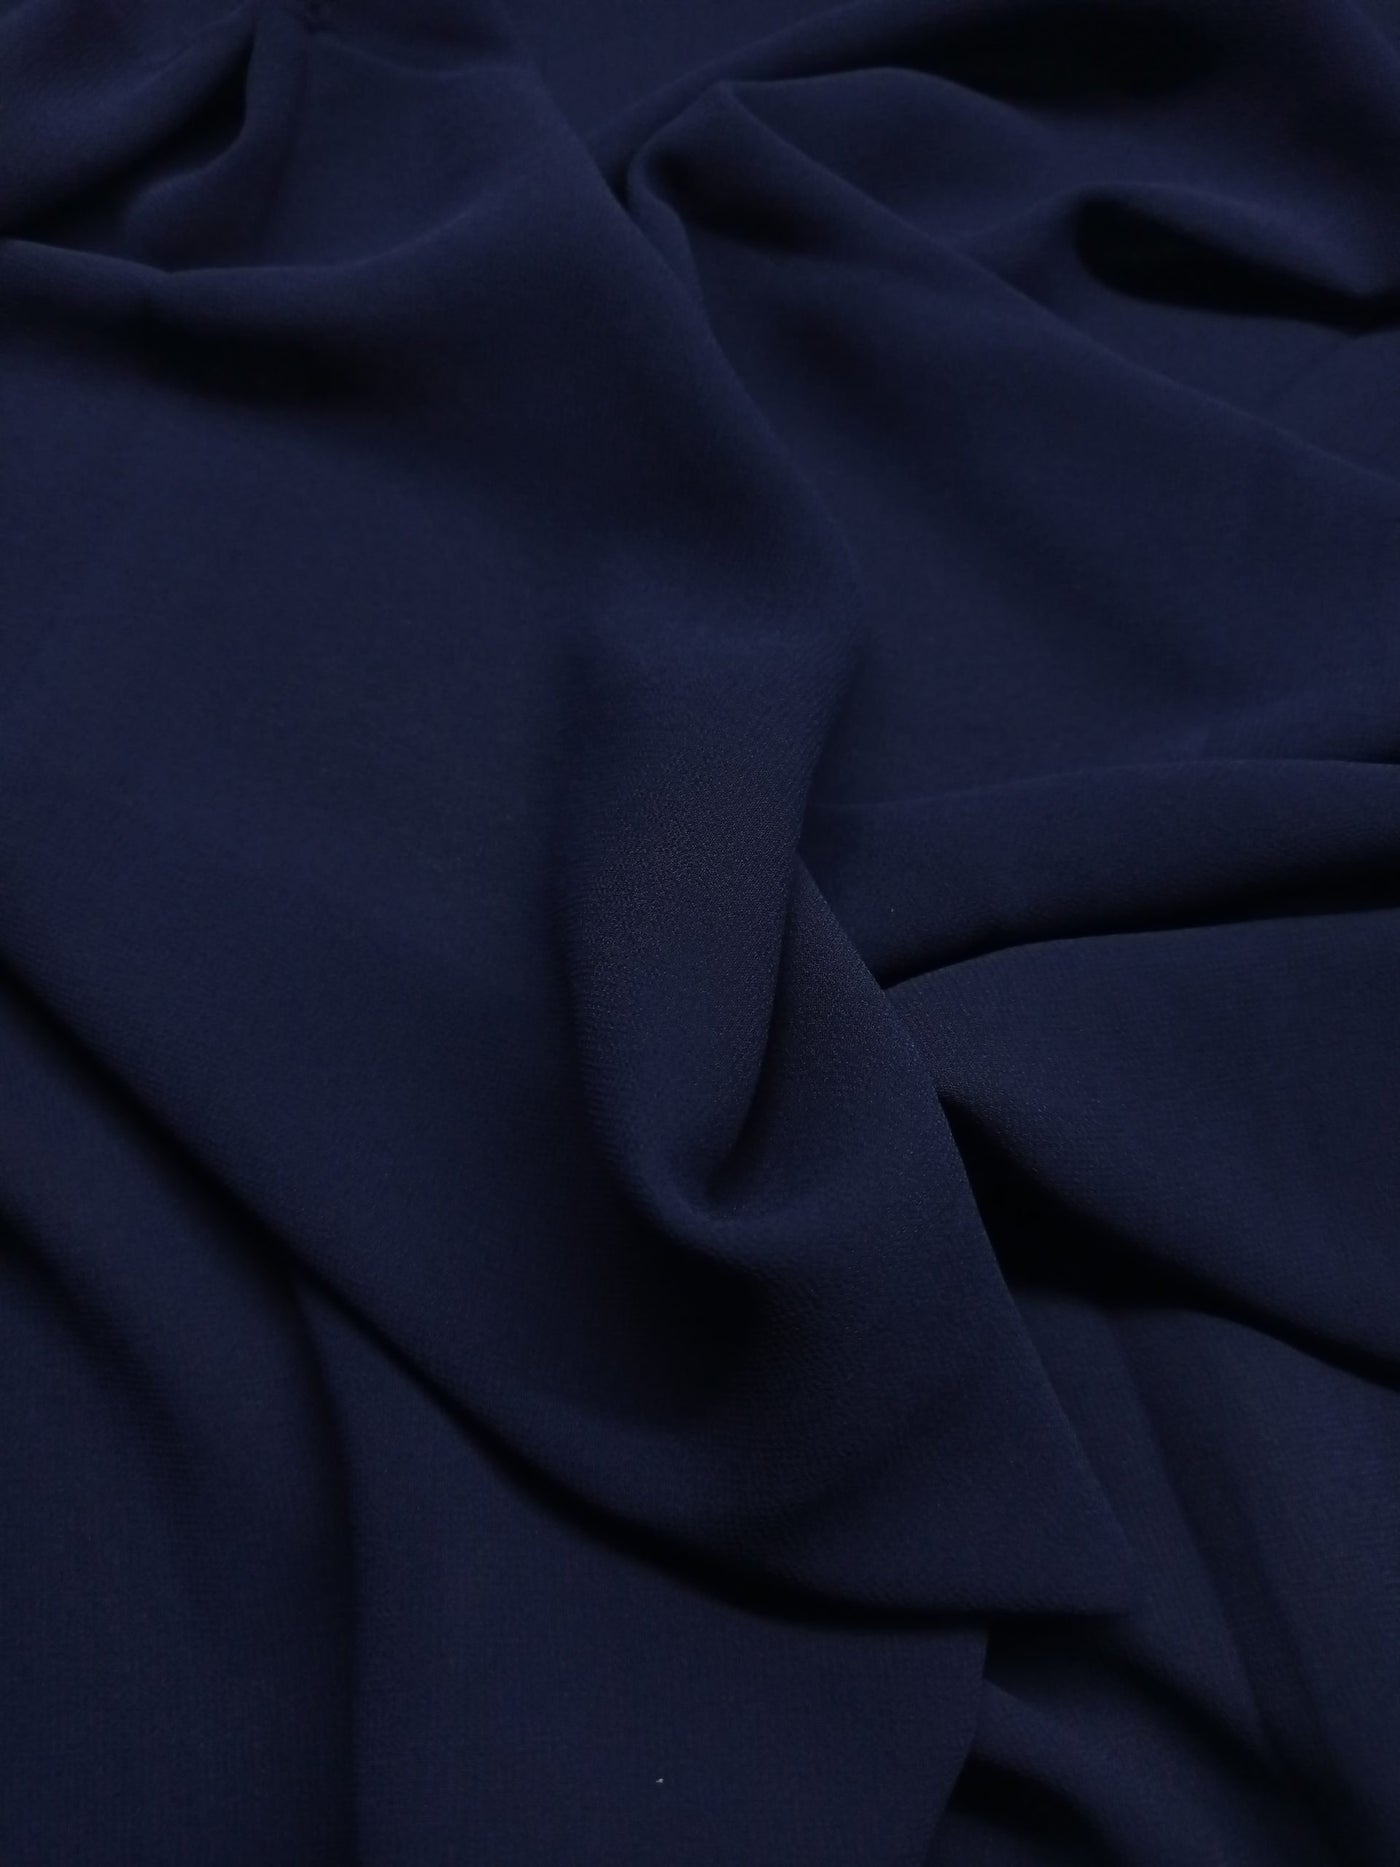 Georgette Hijab – NAVY BLUE - Scarfs.pk #1 Online Hijab Store